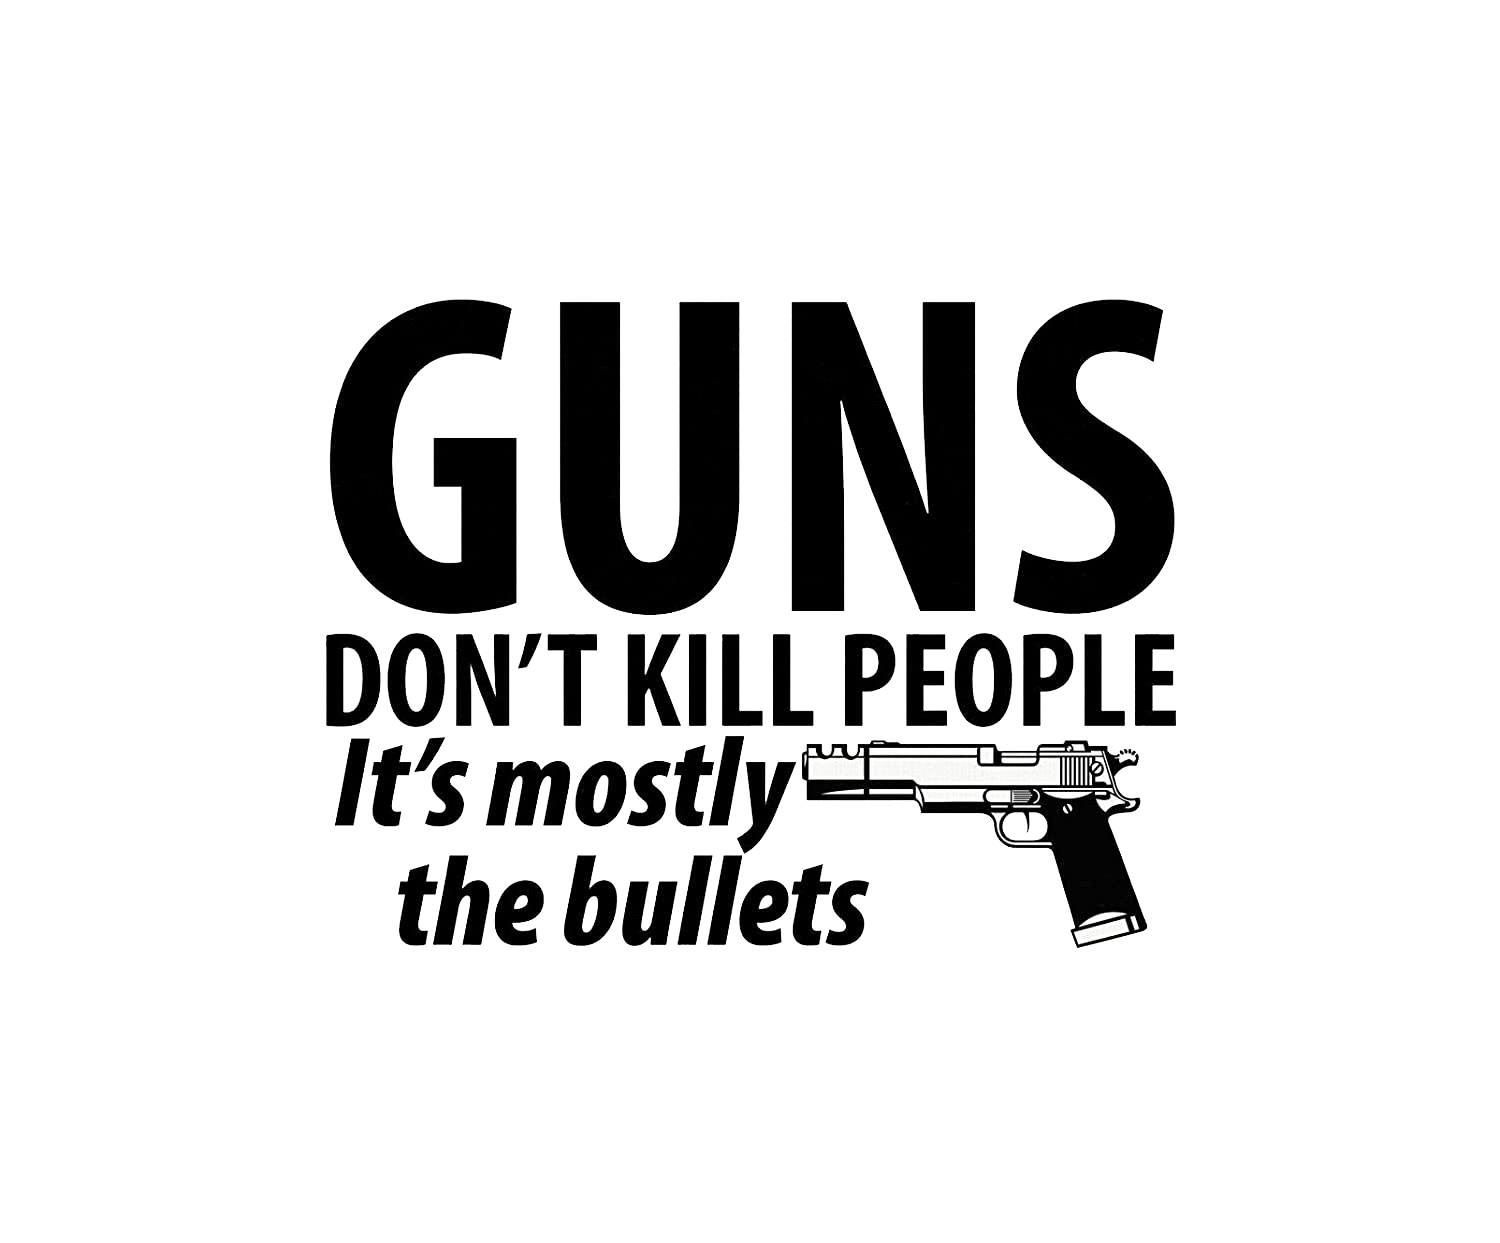 Guns Don't Kill People It's The Bullets T-Shirt